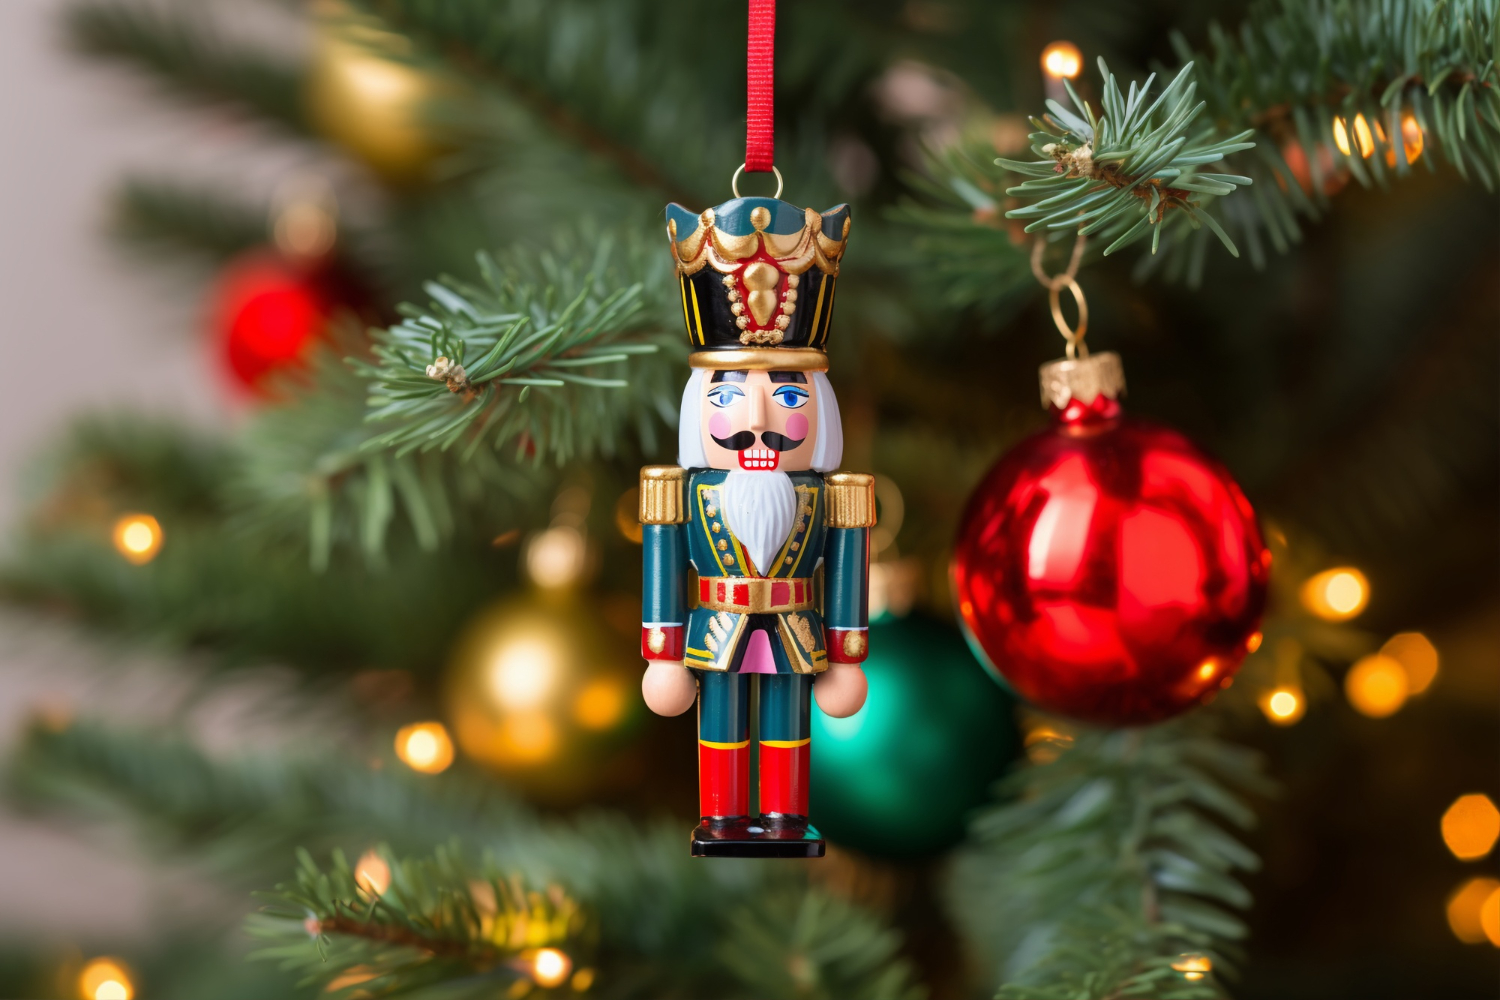 Nutcracker ornament on Christmas tree